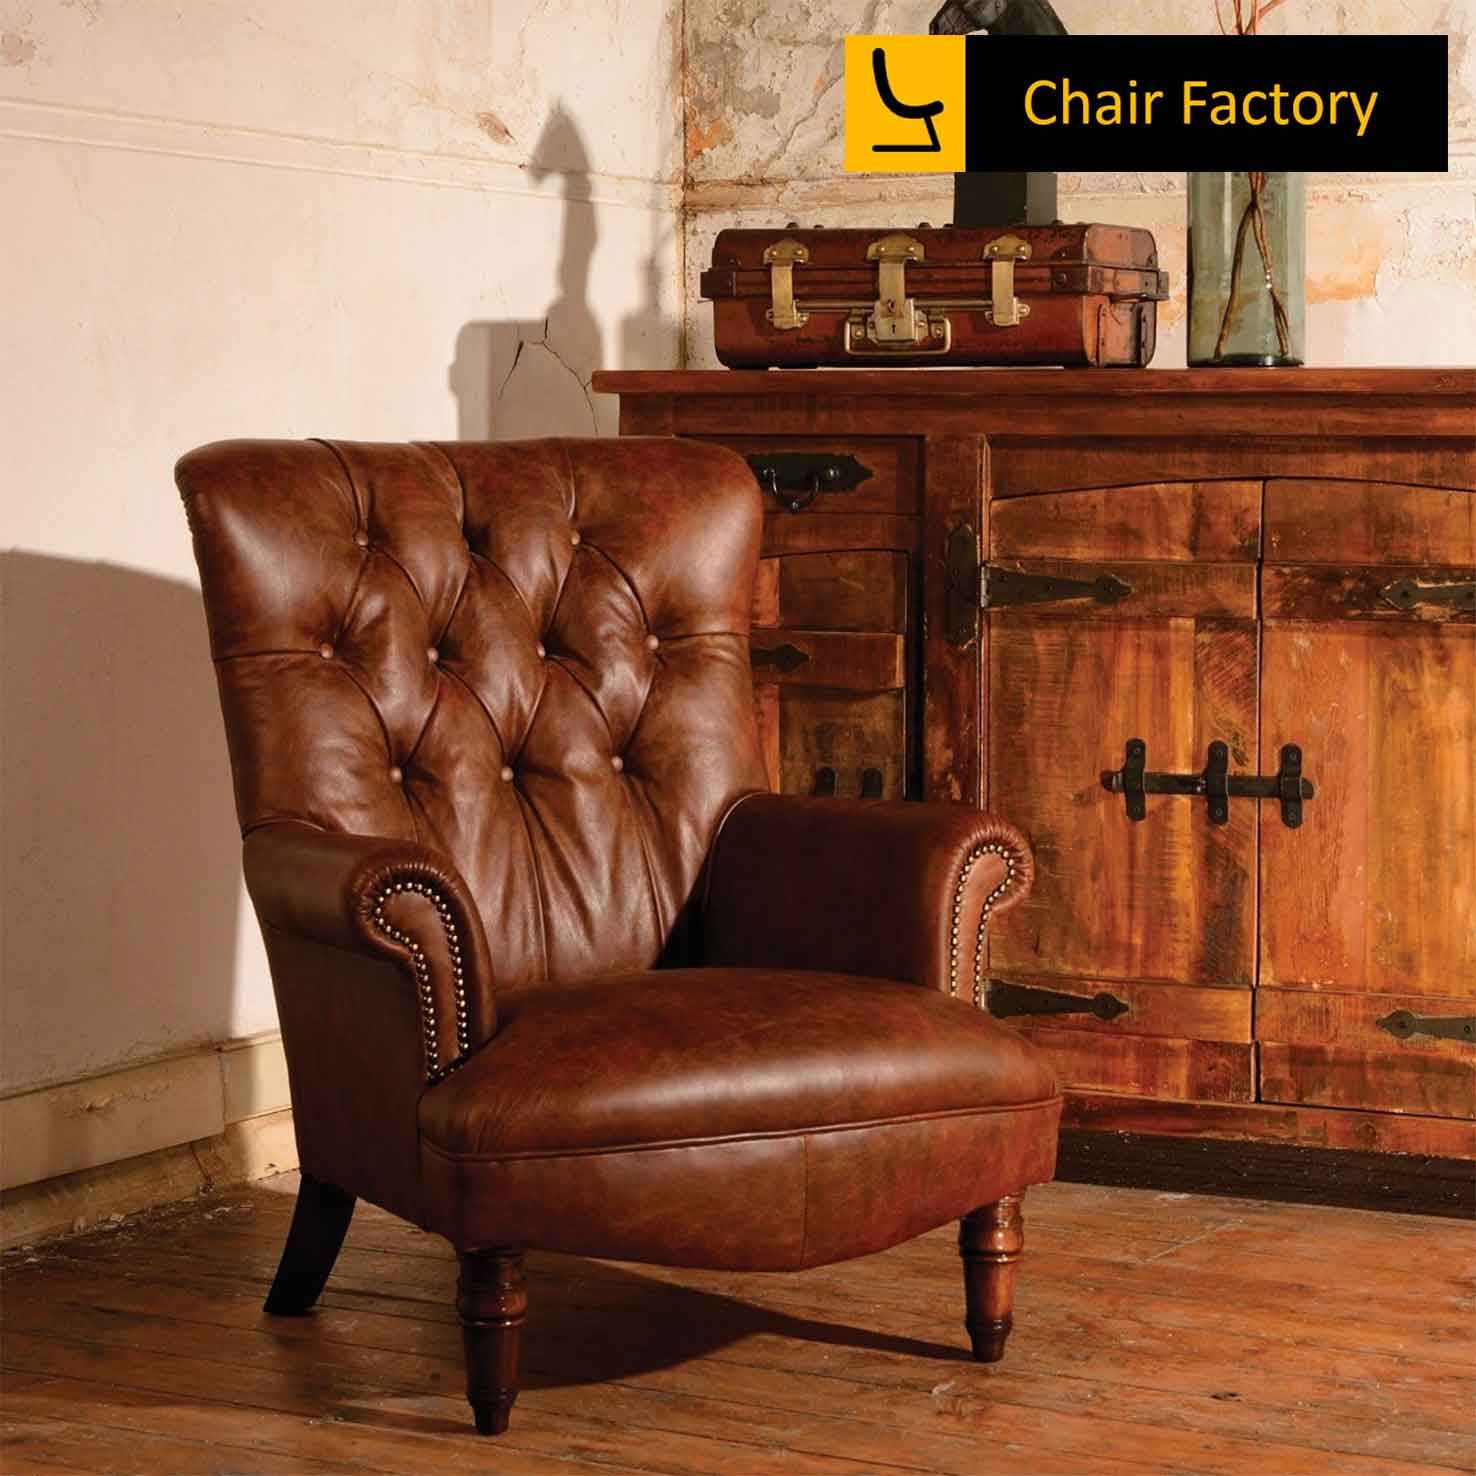 baglion Genuine Leather Arm Chair